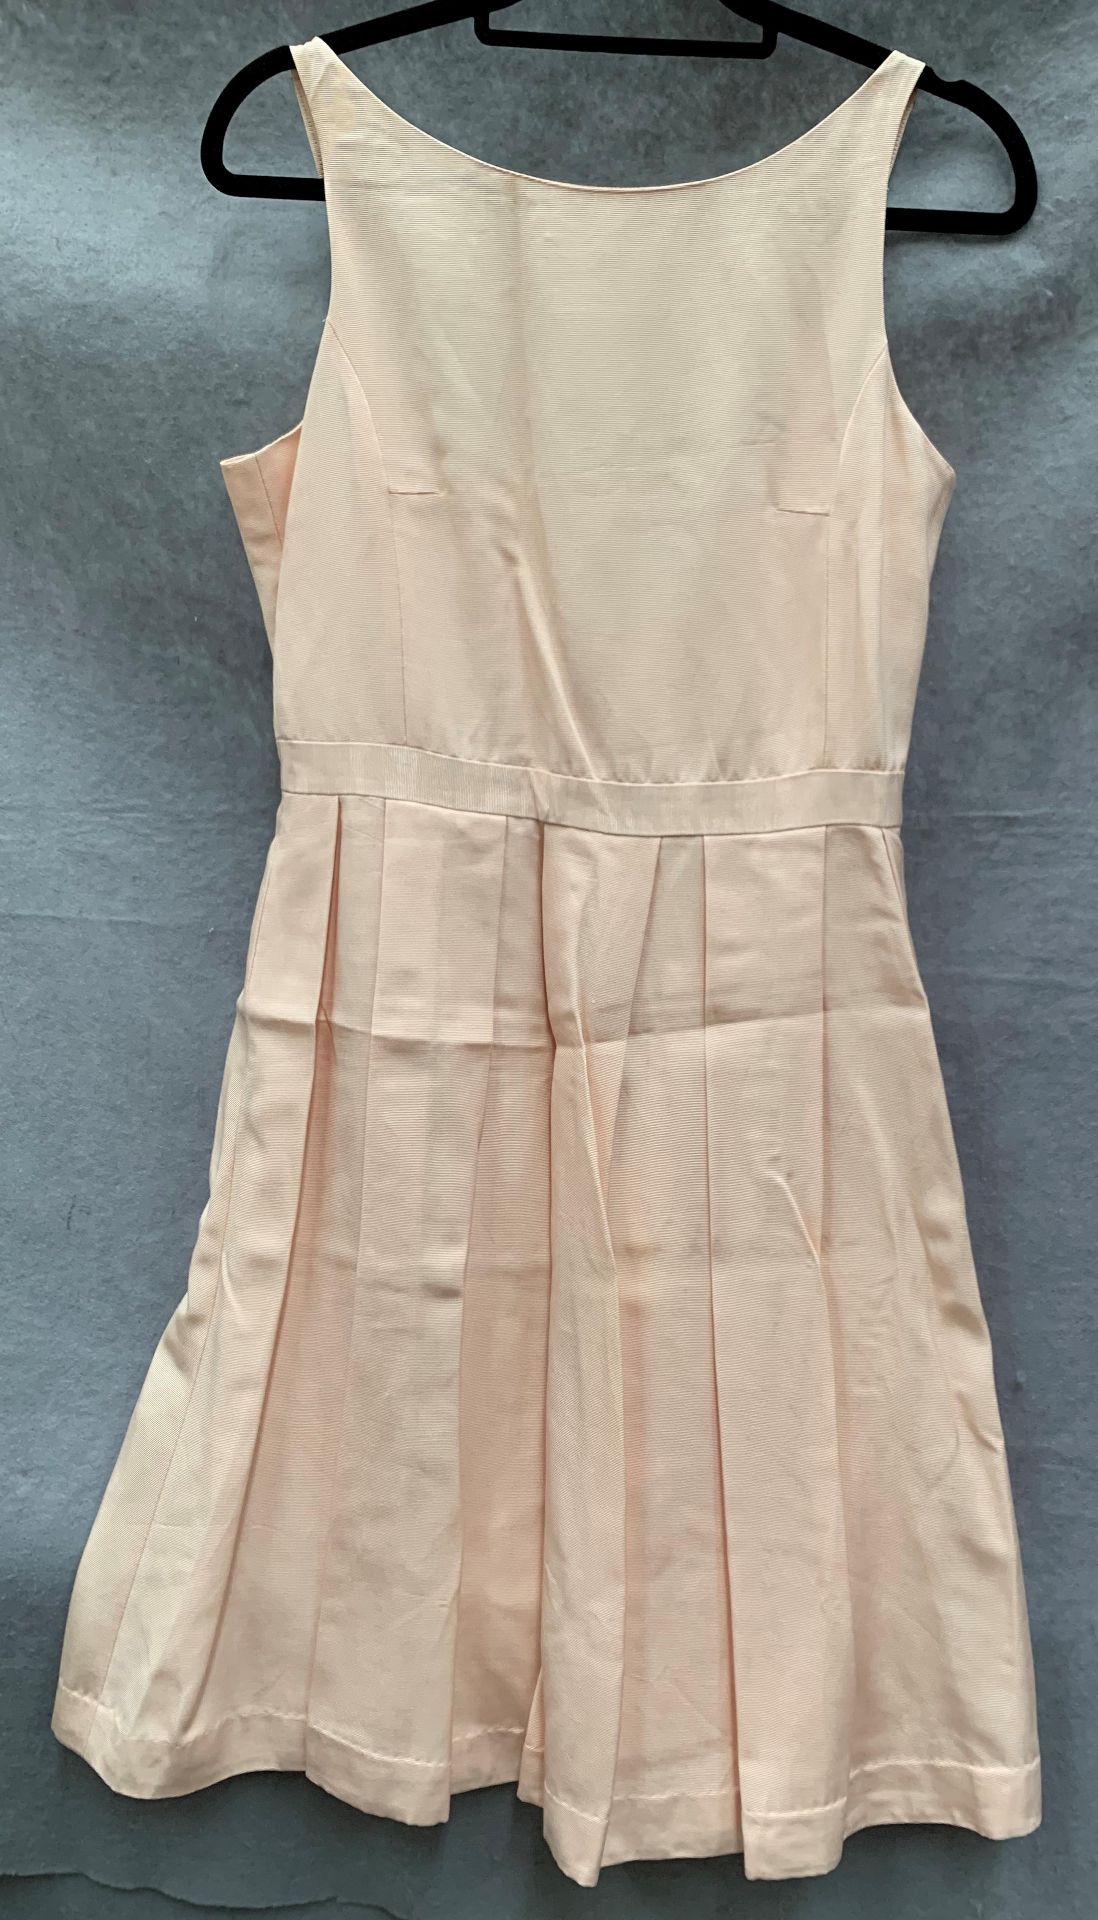 A Havren ladies dress, pink, size 12,